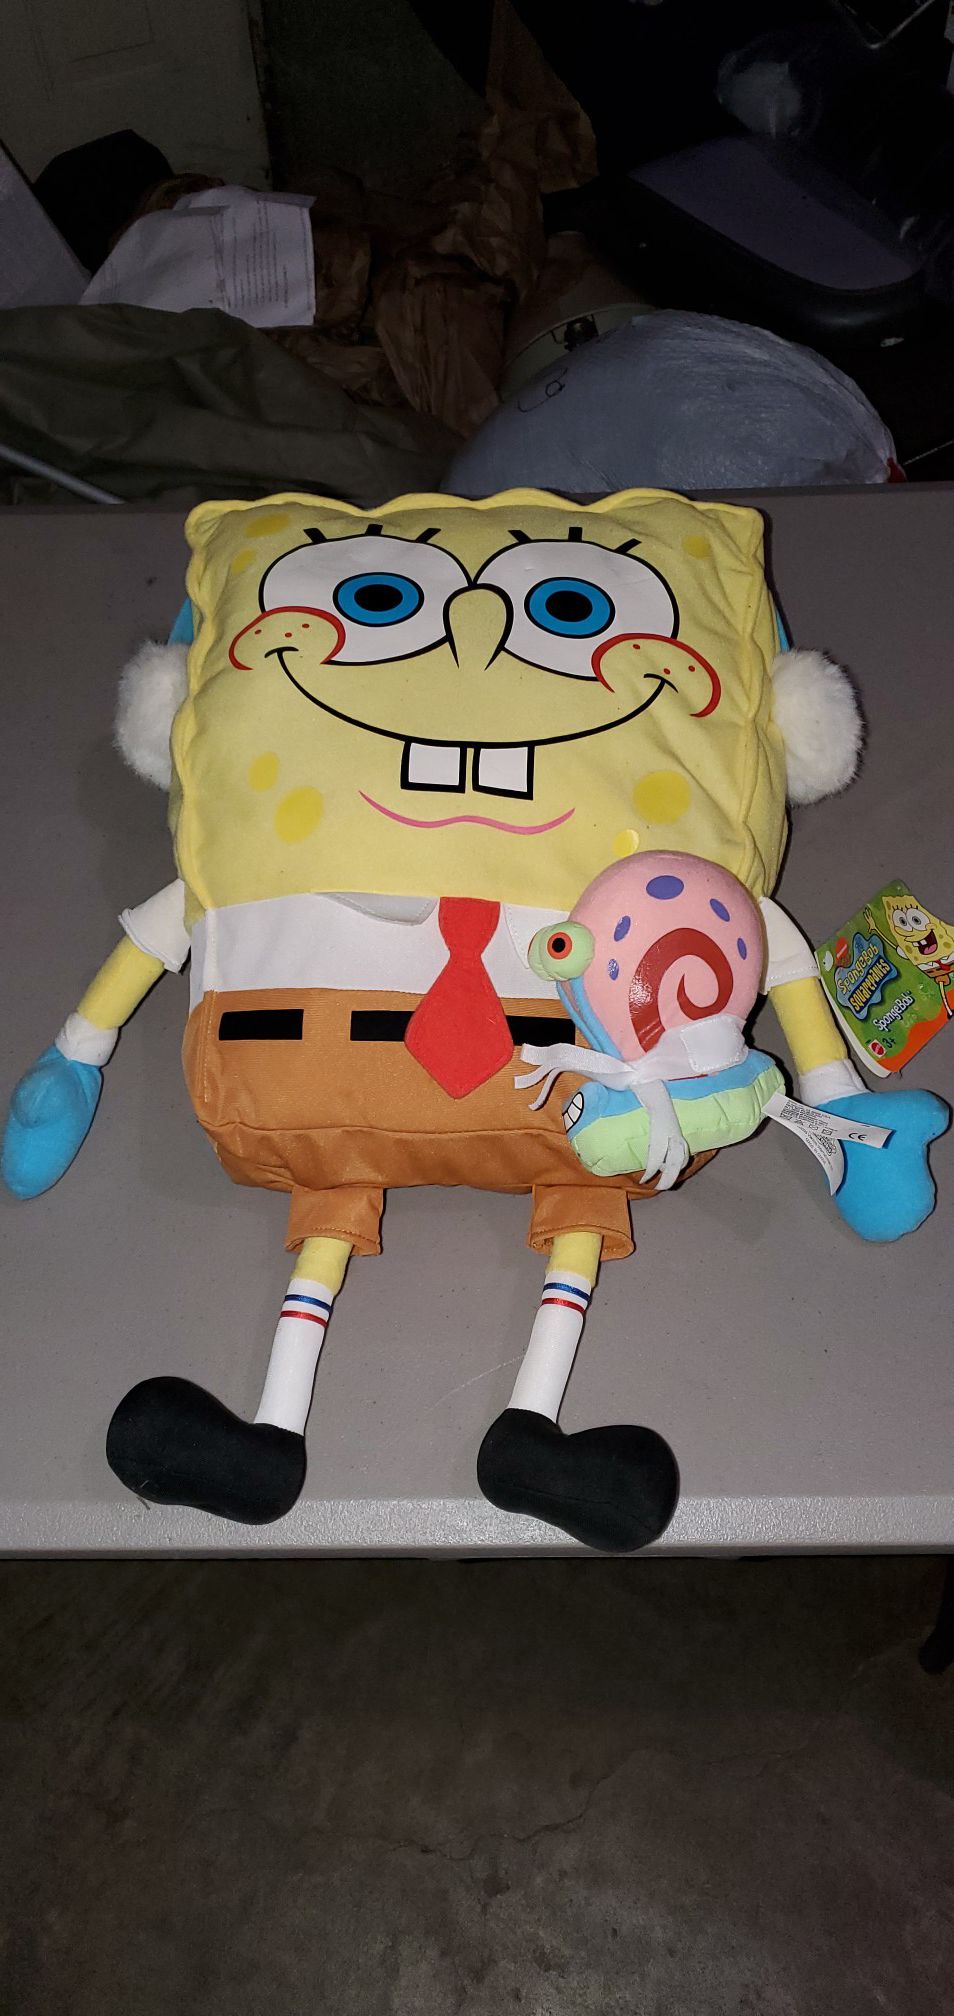 Spongebob square pants stuffed animal